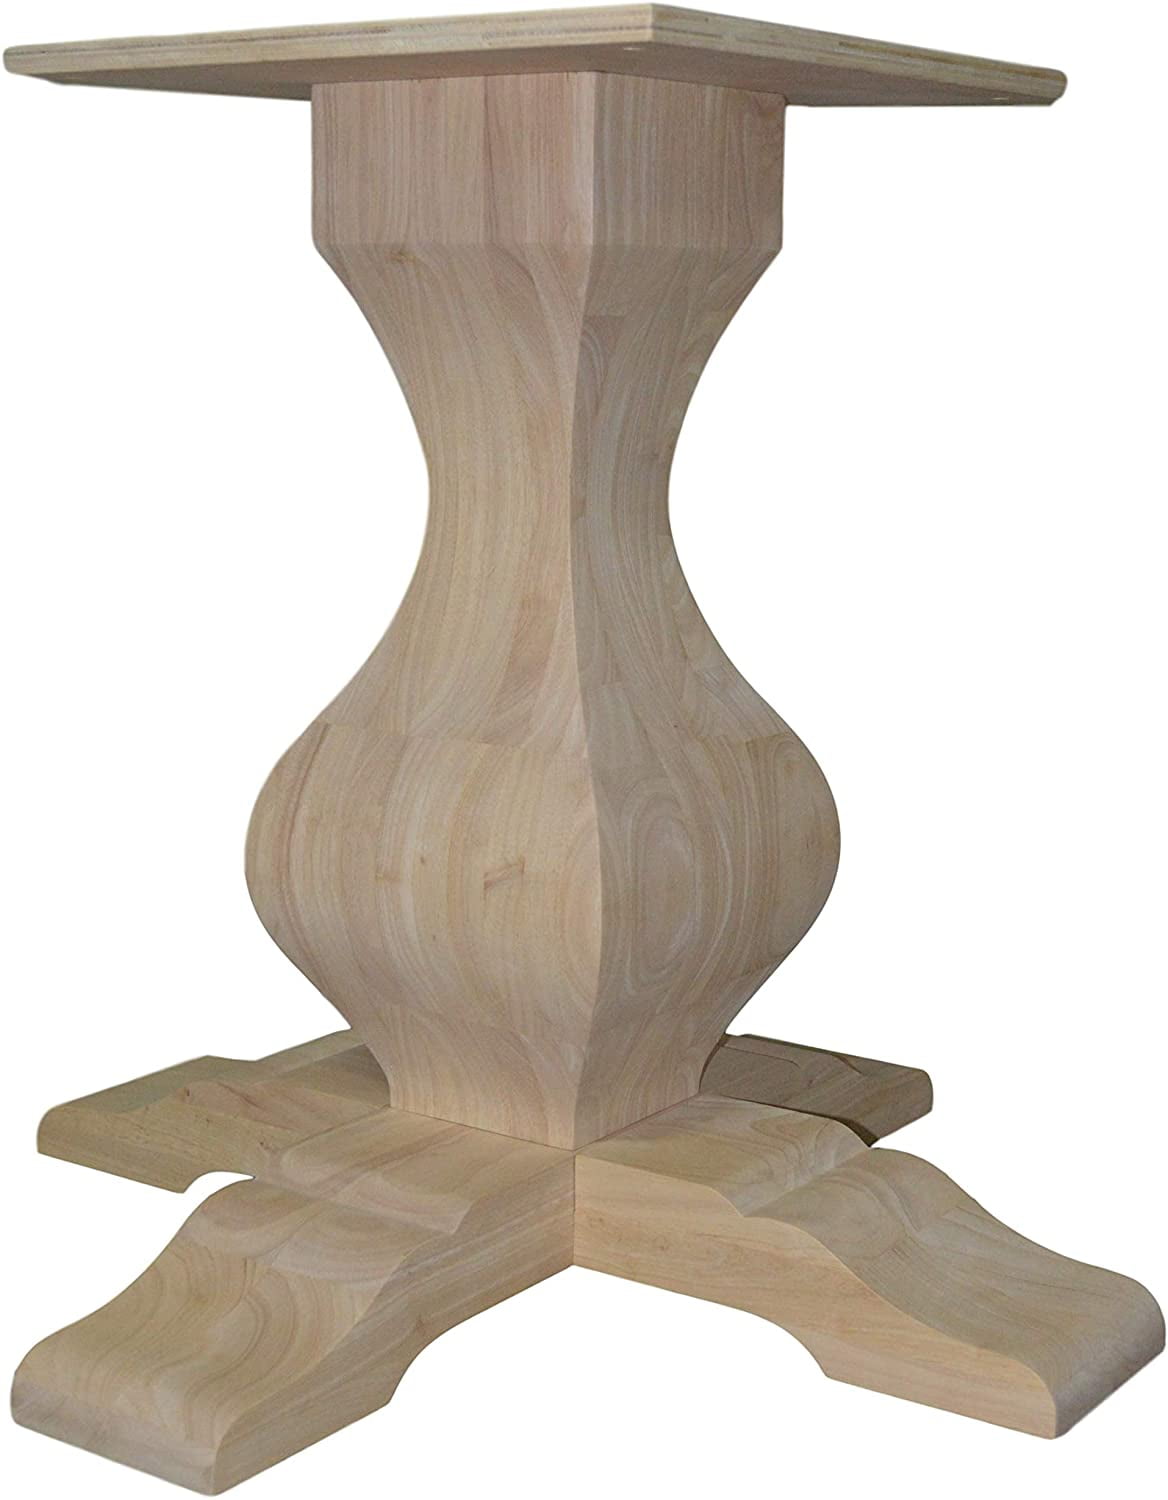  Wood Pedestal Table Base